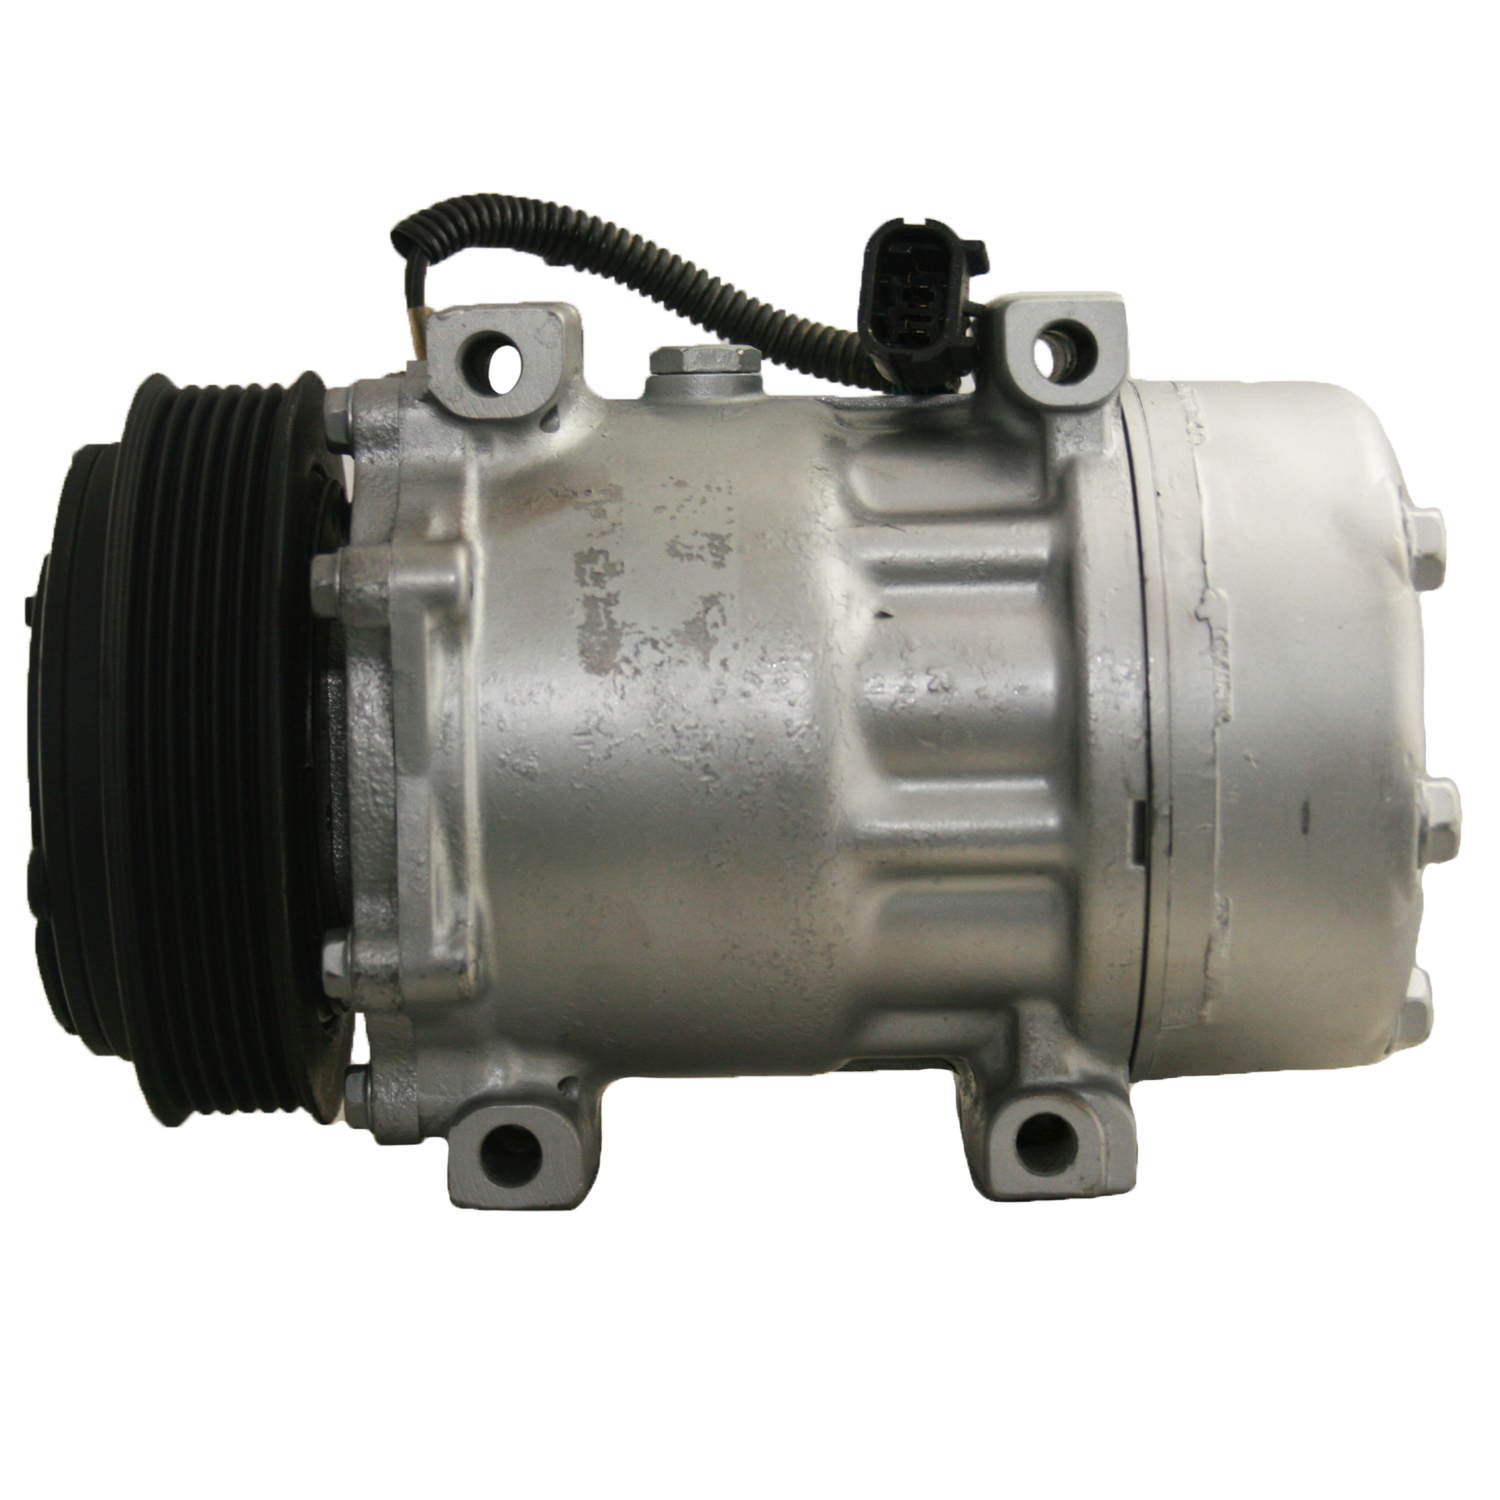 TCW Compressor 40599.6T2 Remanufactured